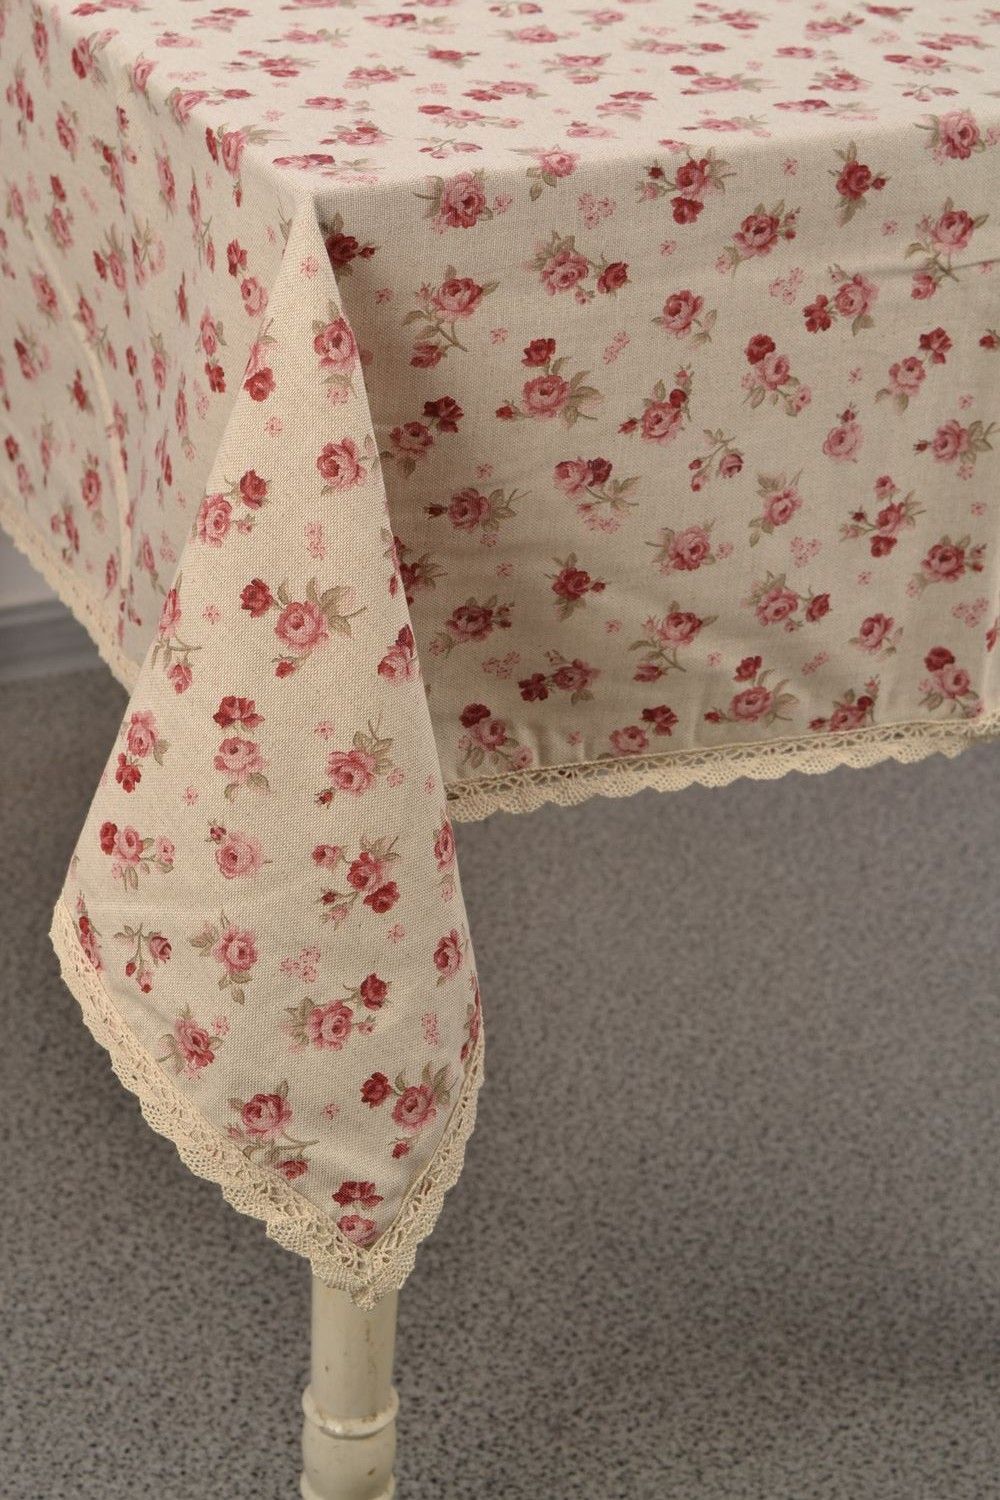 Stylish handmade tablecloth kitchen design home textiles table setting ideas photo 1